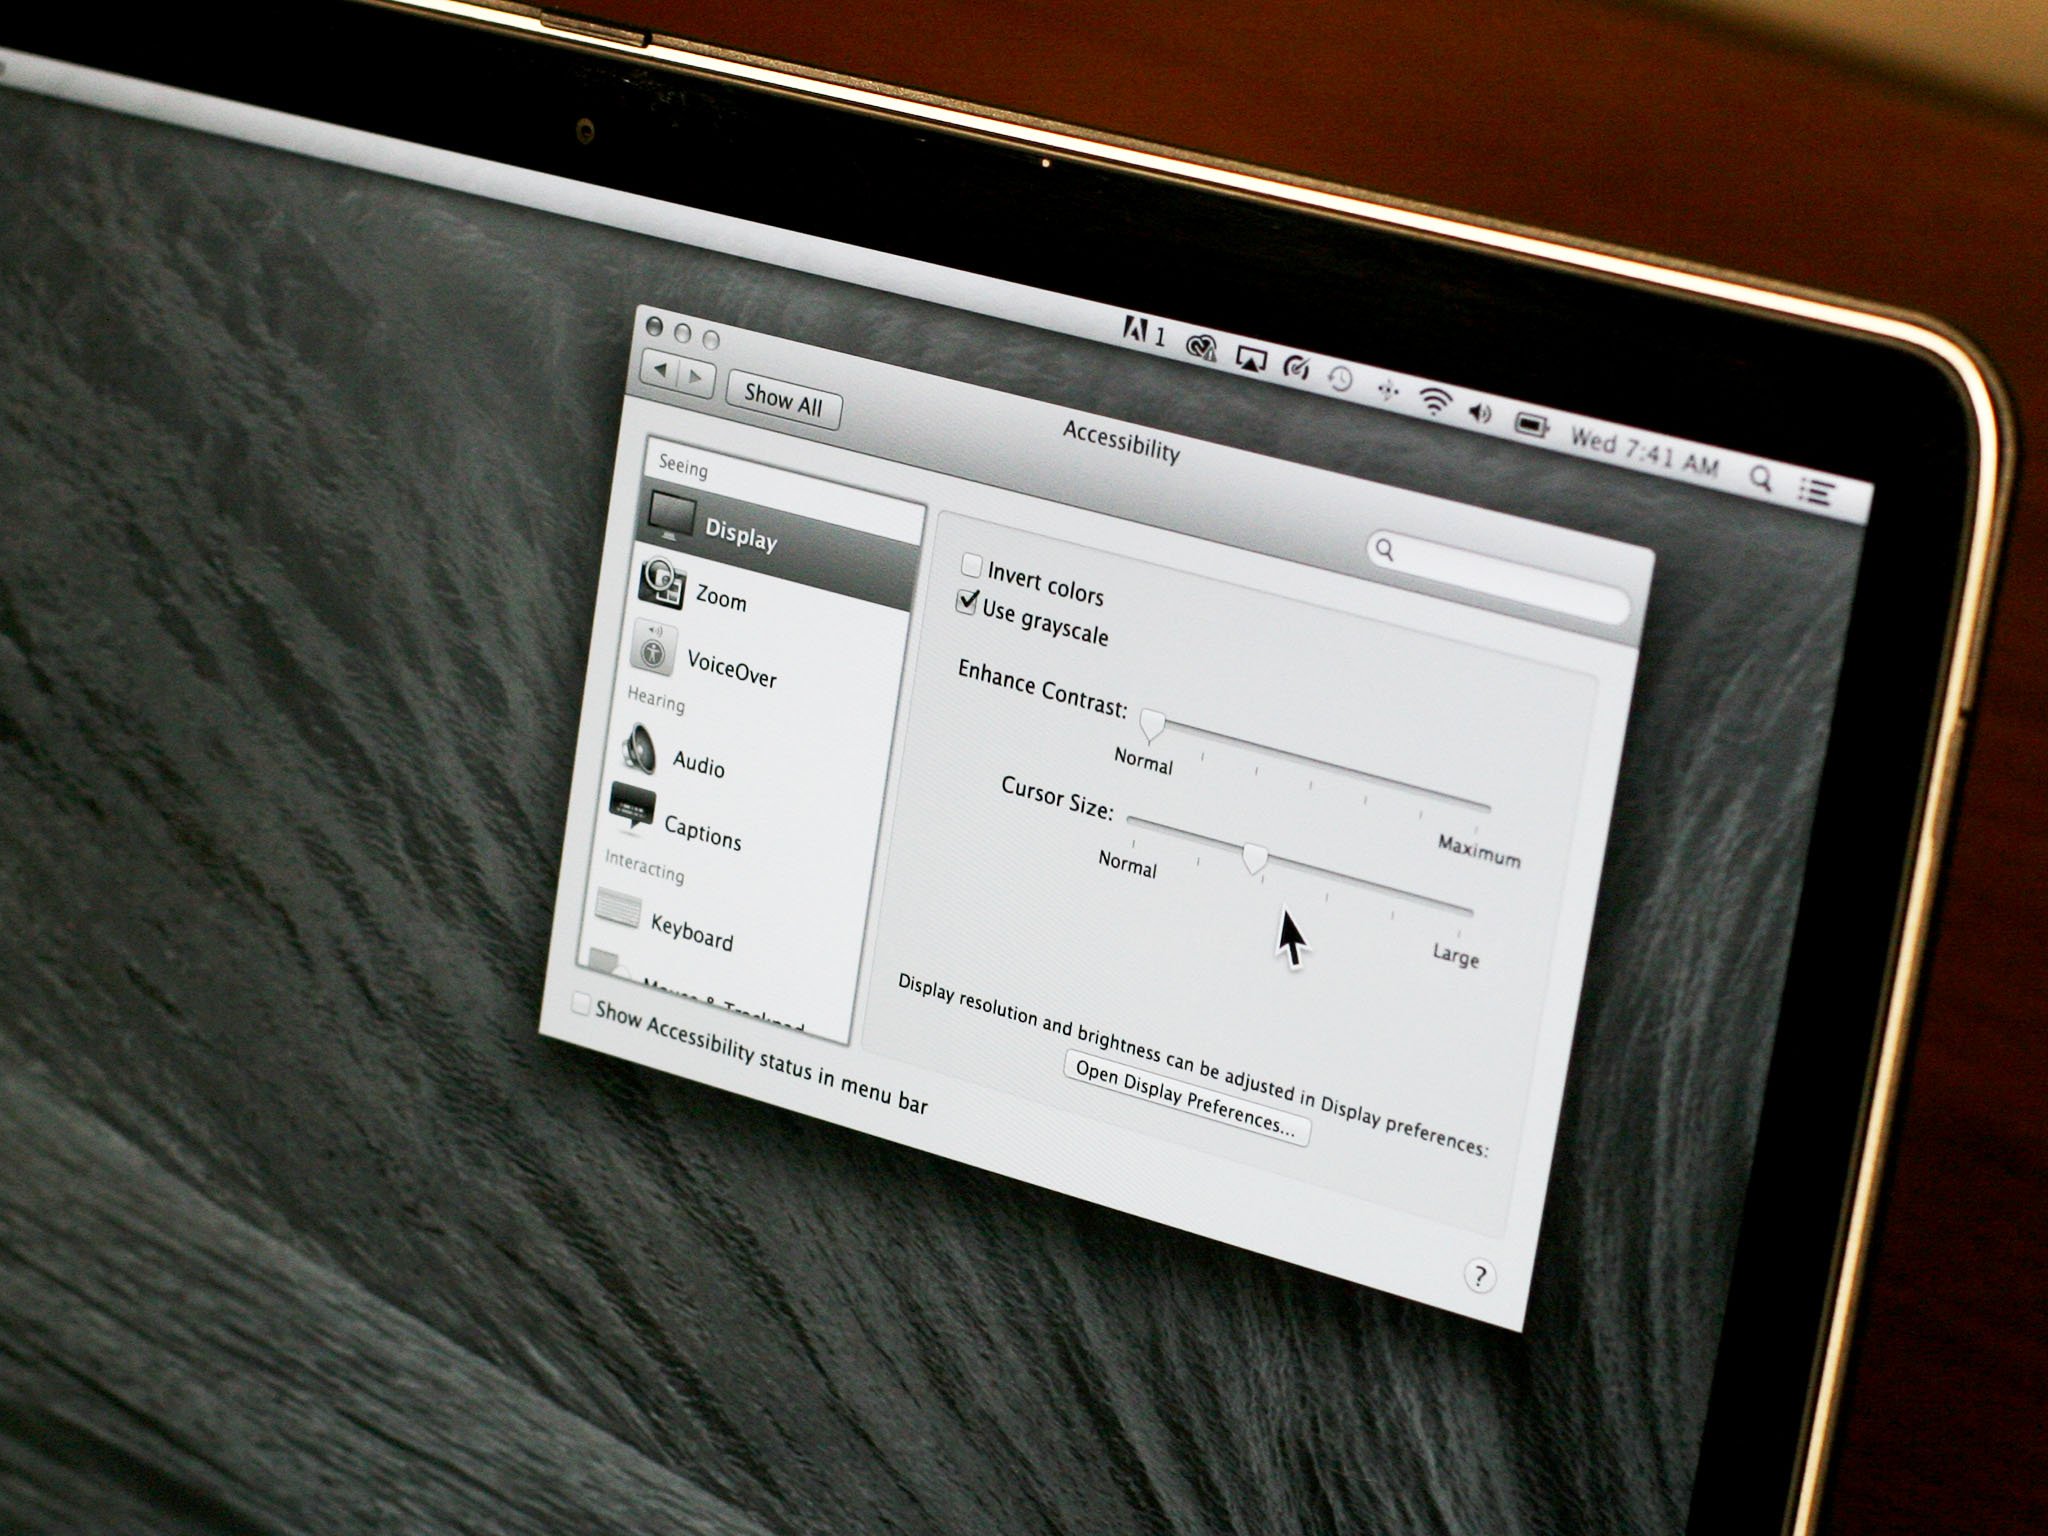 How to tweak the Mac's display settings for visual impairments